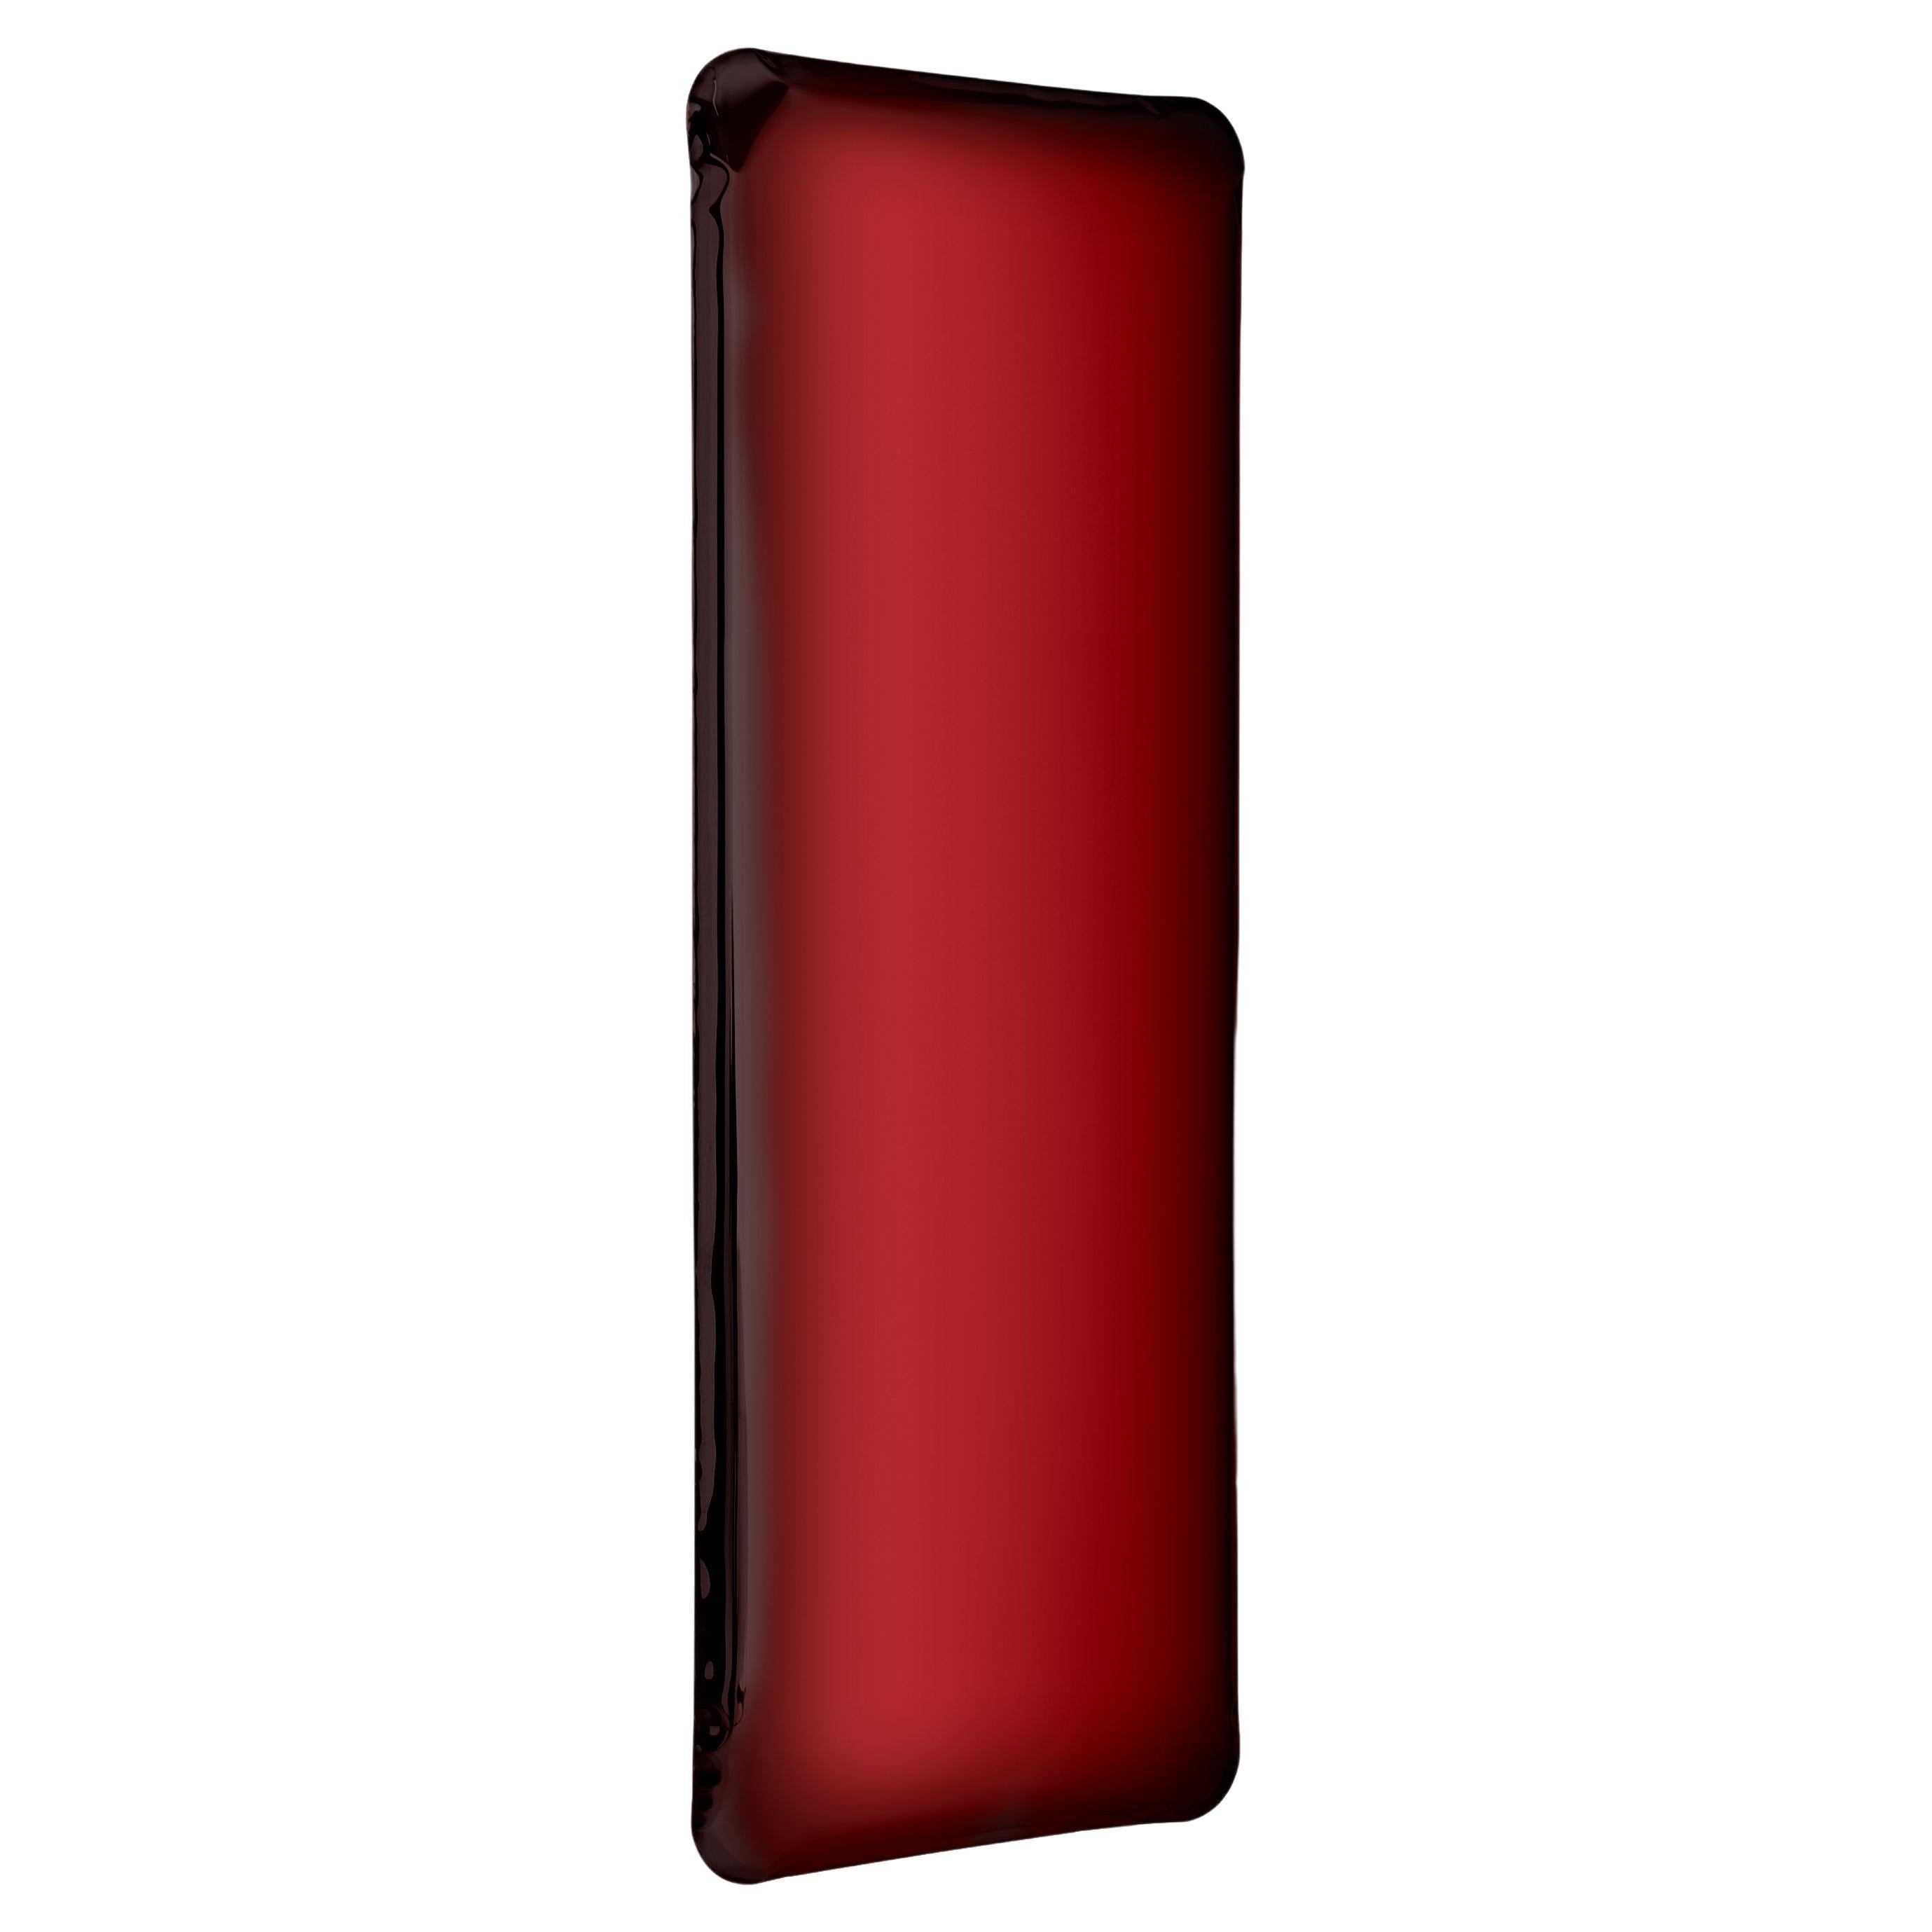 Red Rubin Tafla Q1 Sculptural Wall Mirror by Zieta For Sale